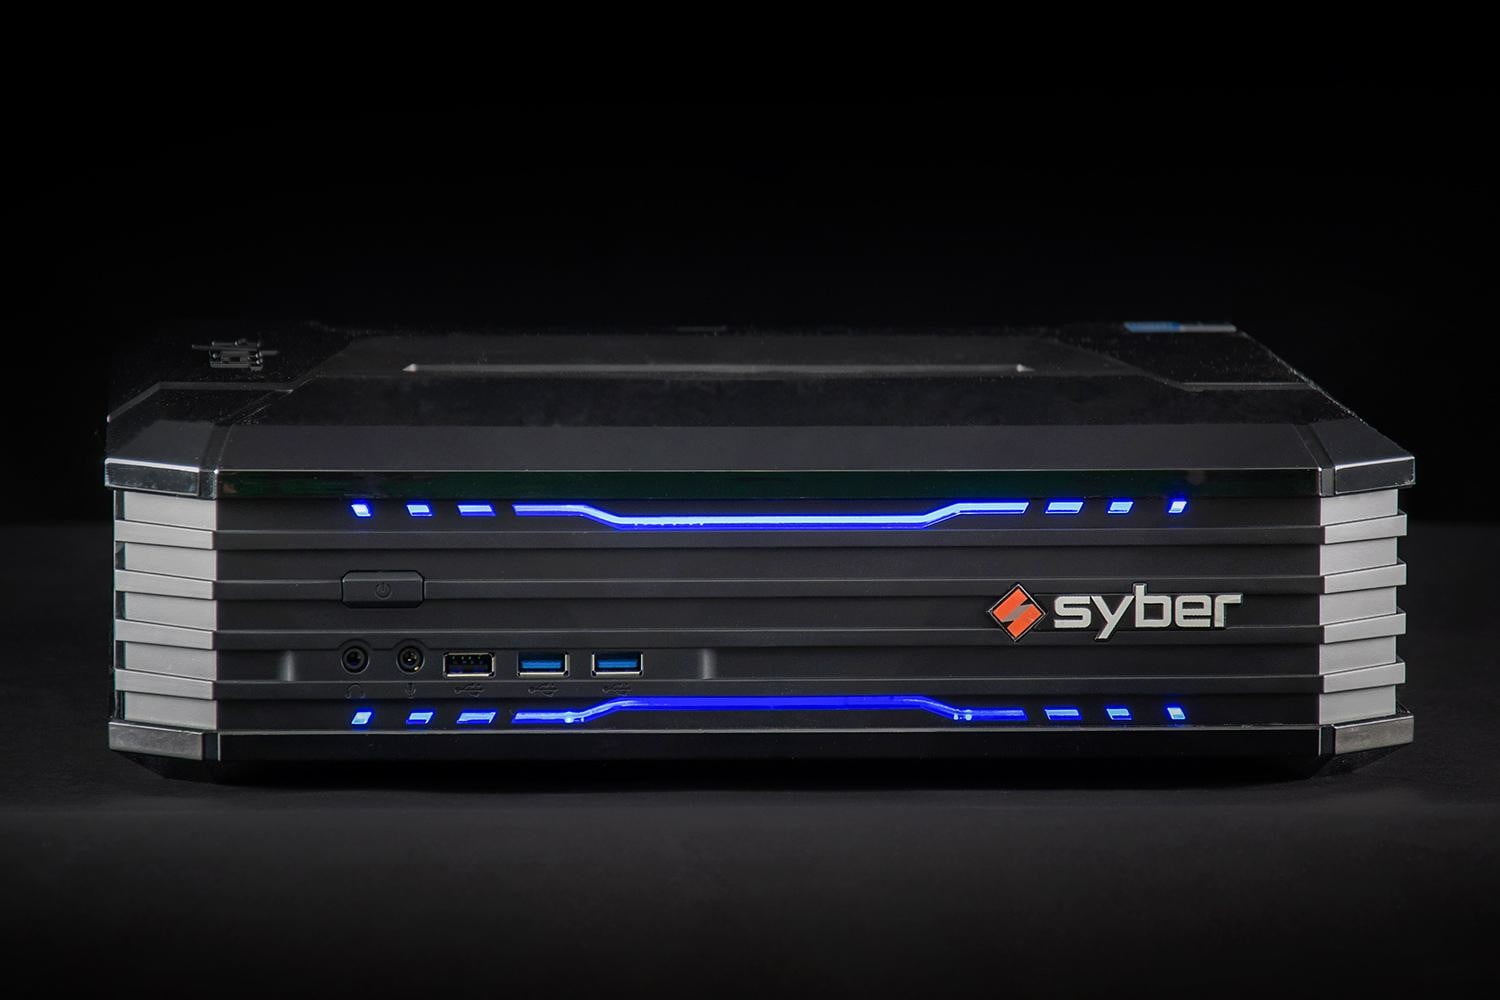 Syber Vapor - CyberPowerPC